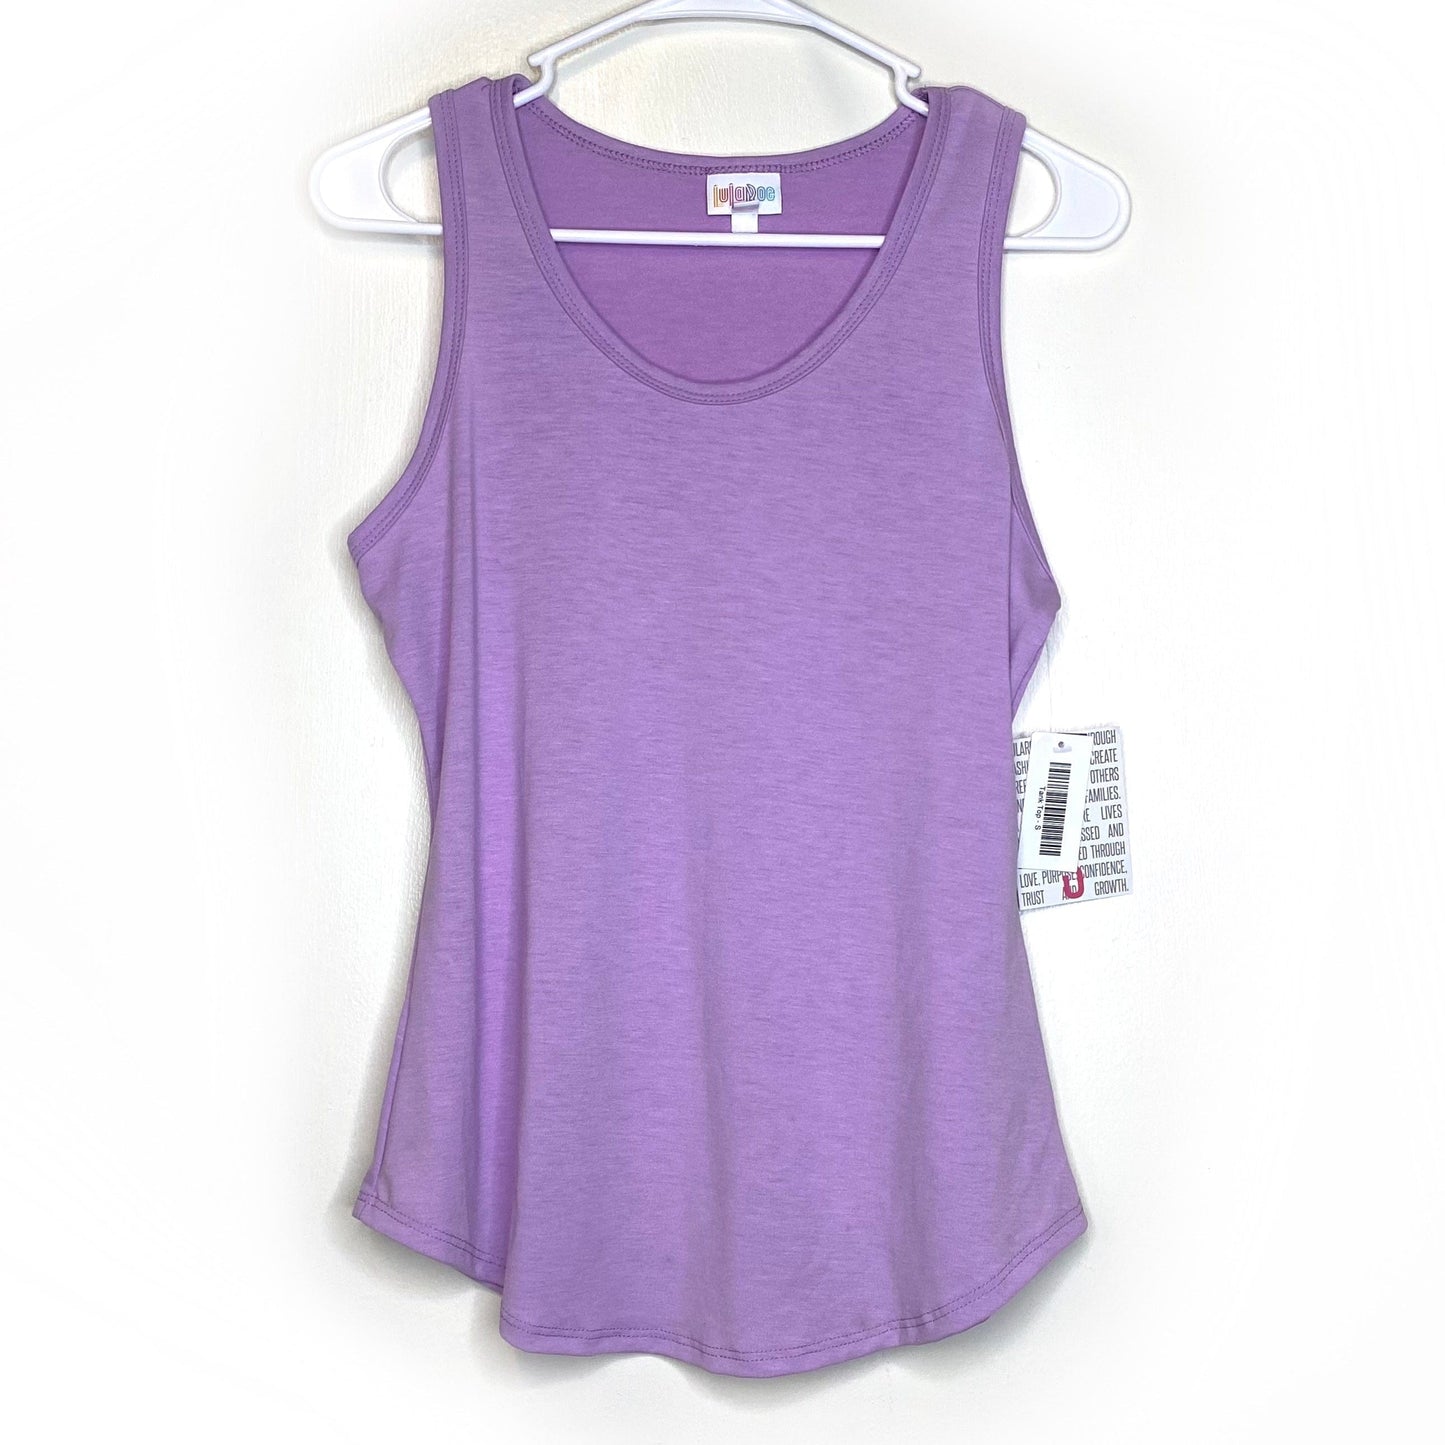 LuLaRoe Womens Size S Lilac Purple Tank Top Shirt Sleeveless NWT